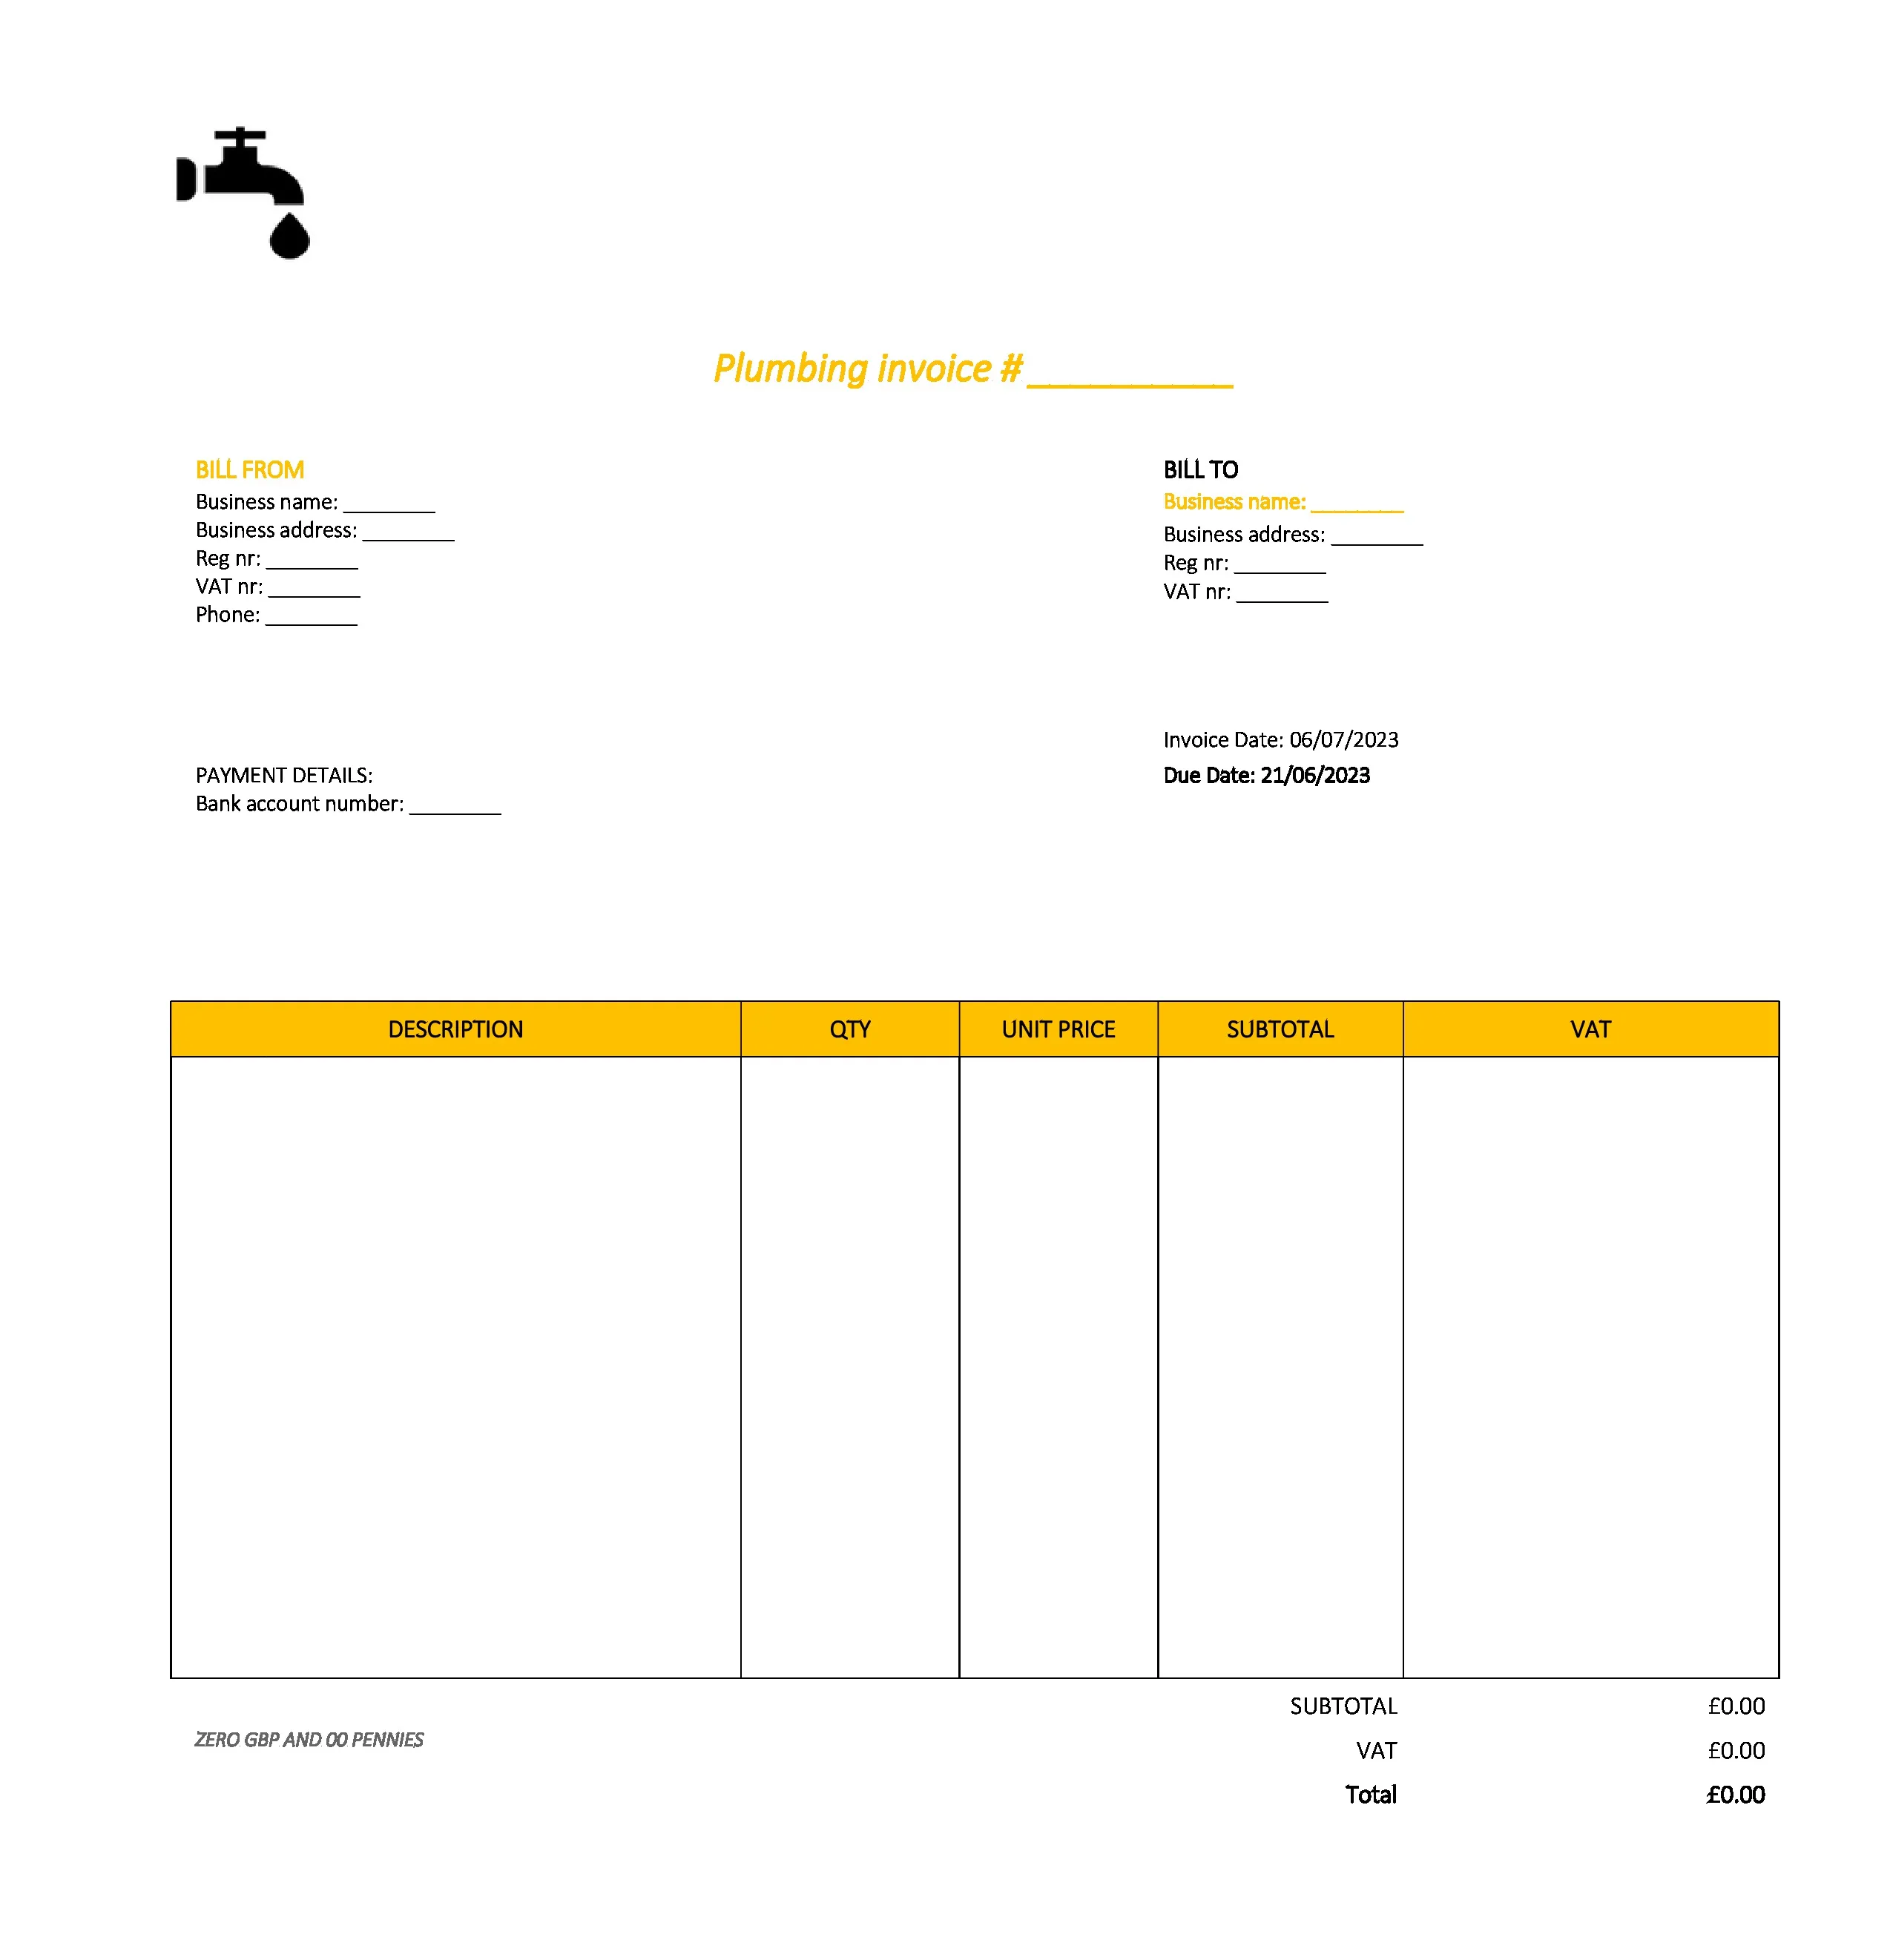 draft plumbing invoice template UK Excel / Google sheets